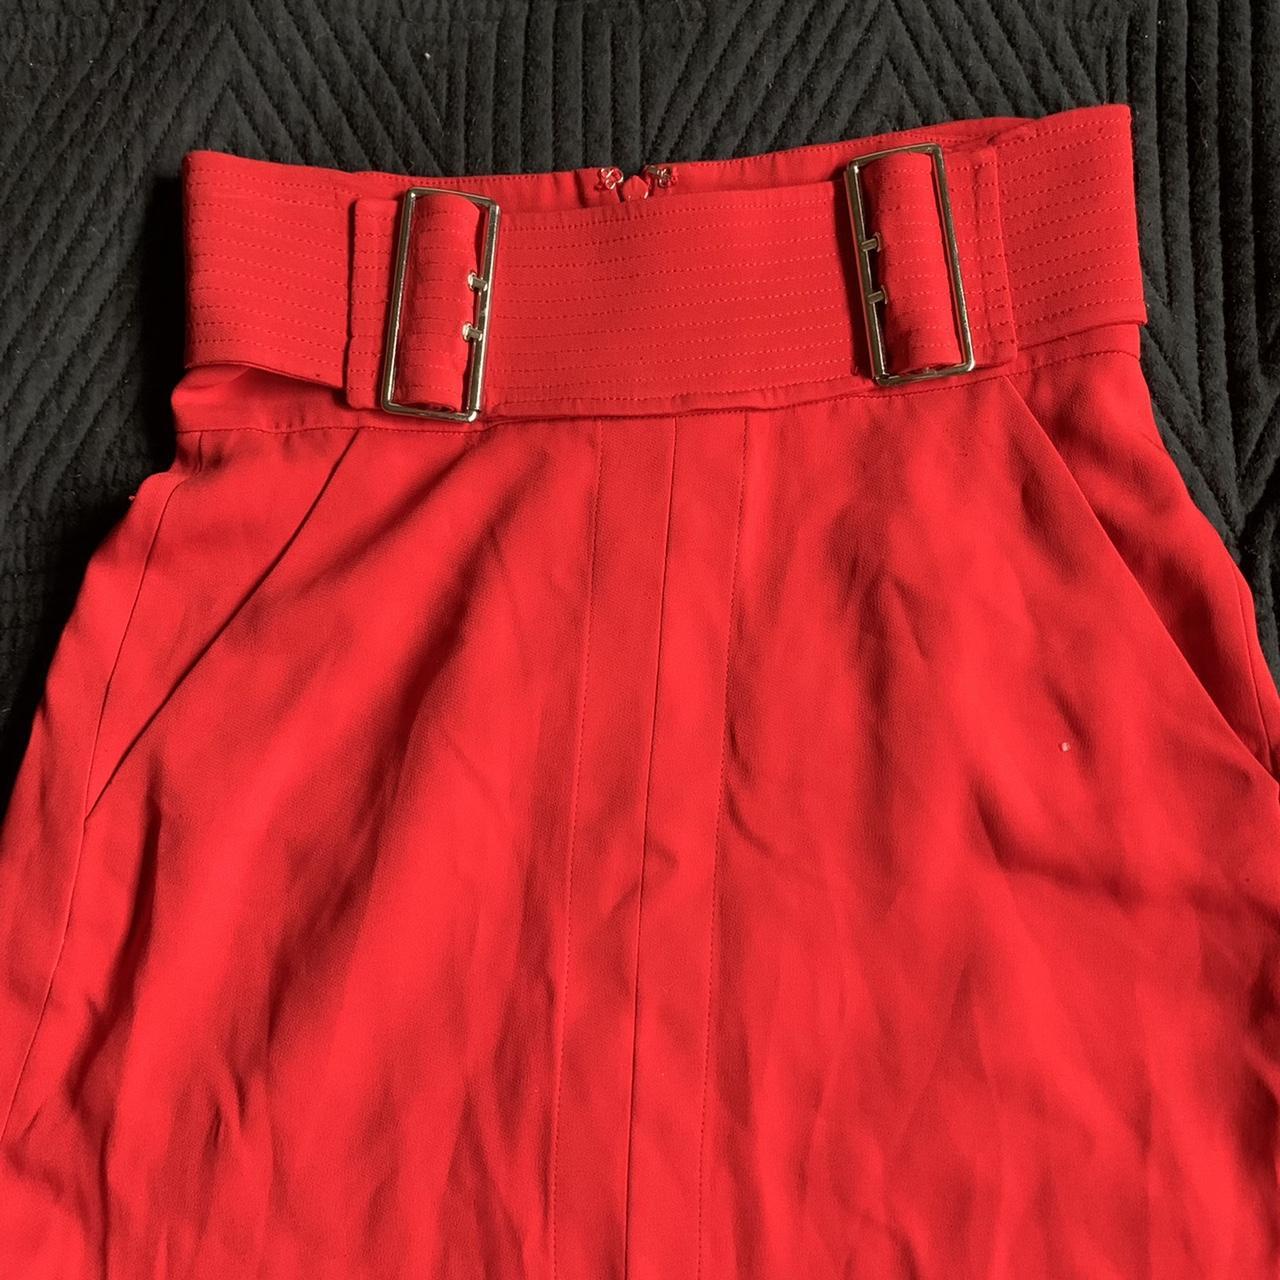 Product Image 3 - Red High Slit Midi Skirt

High